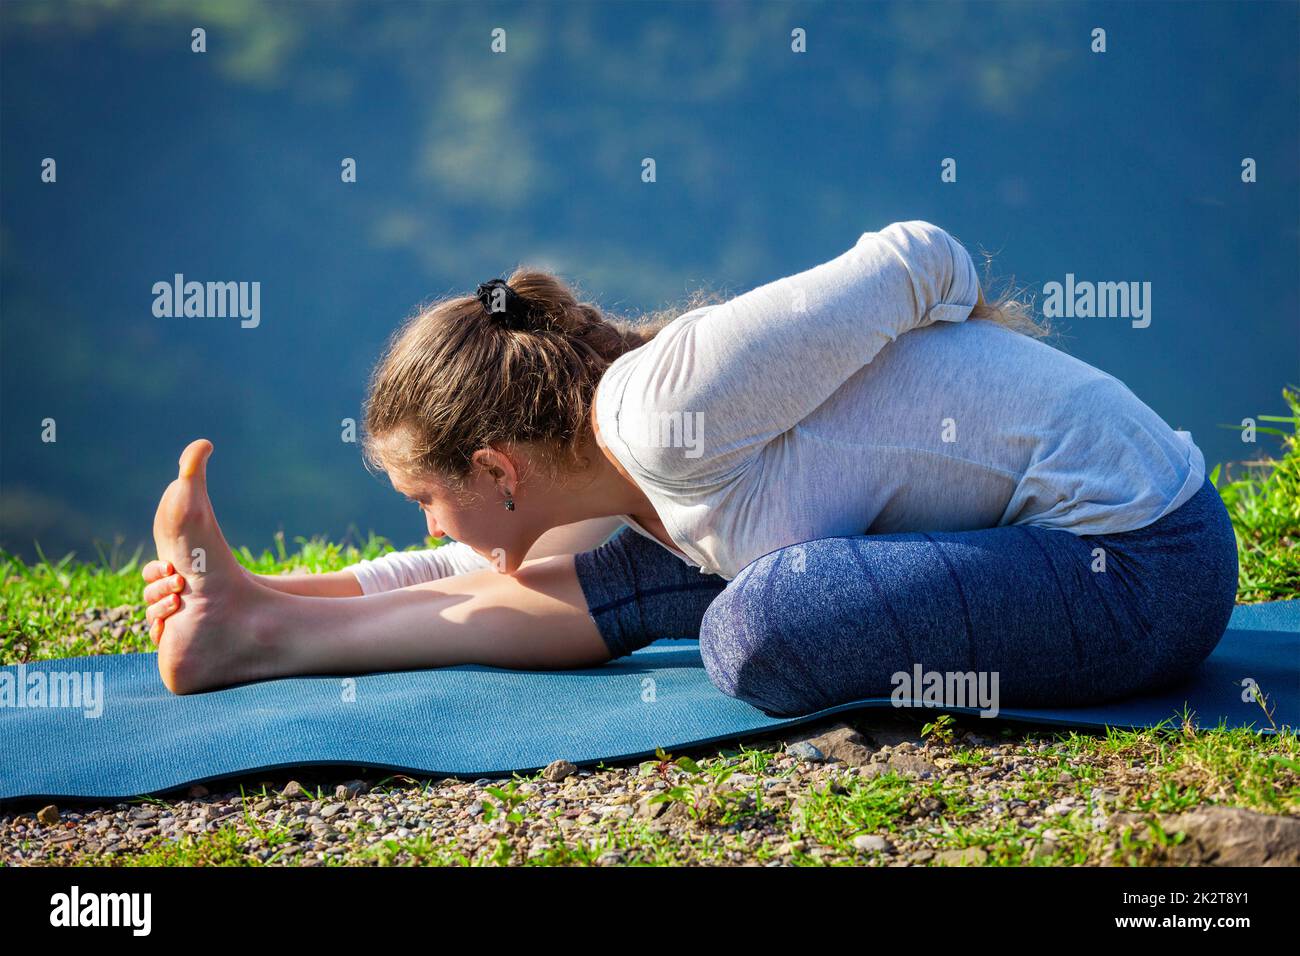 Woman doing yoga asana outdoors Stock Photo